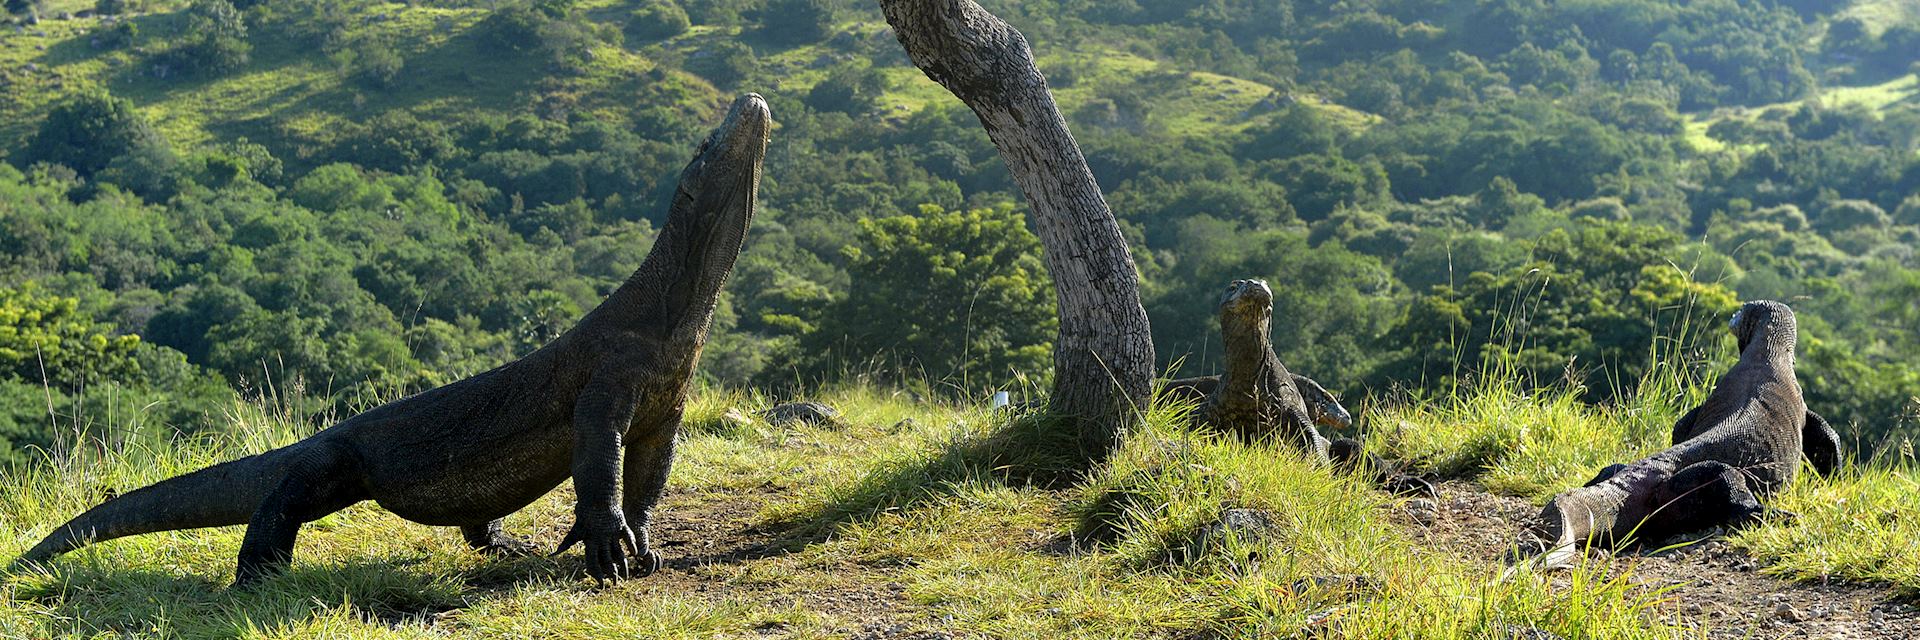 Komodo dragons, Komodo National Park